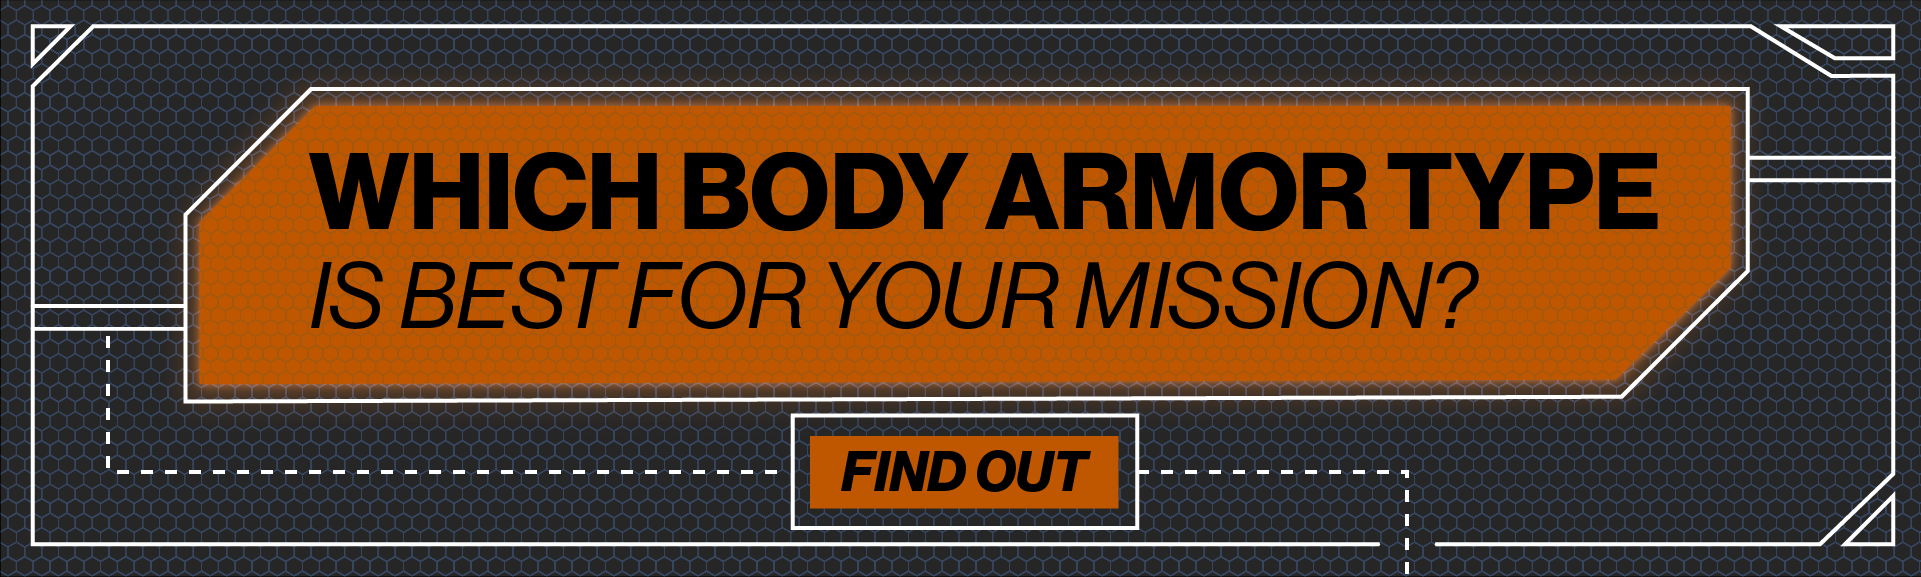 Armored Republic Body Armor Matrix